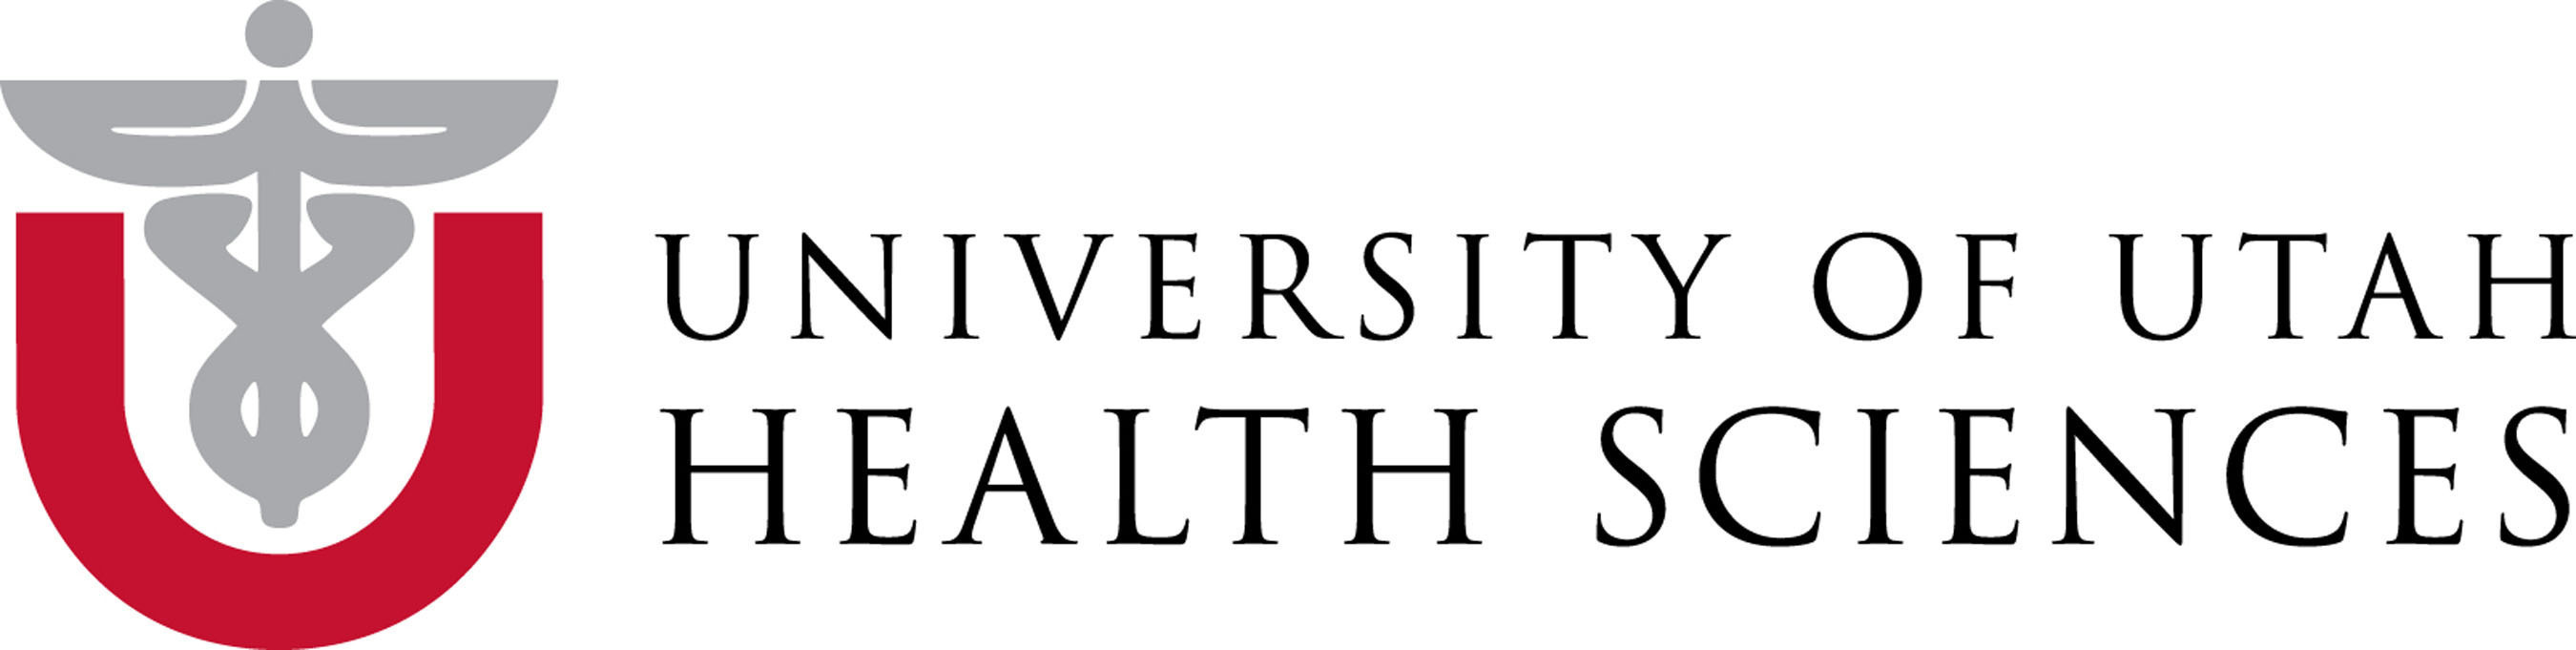 University of Utah Health Sciences Logo. (PRNewsFoto/Huntsman Cancer Institute at the University of Utah) (PRNewsFoto/HUNTSMAN CANCER INSTITUTE...)